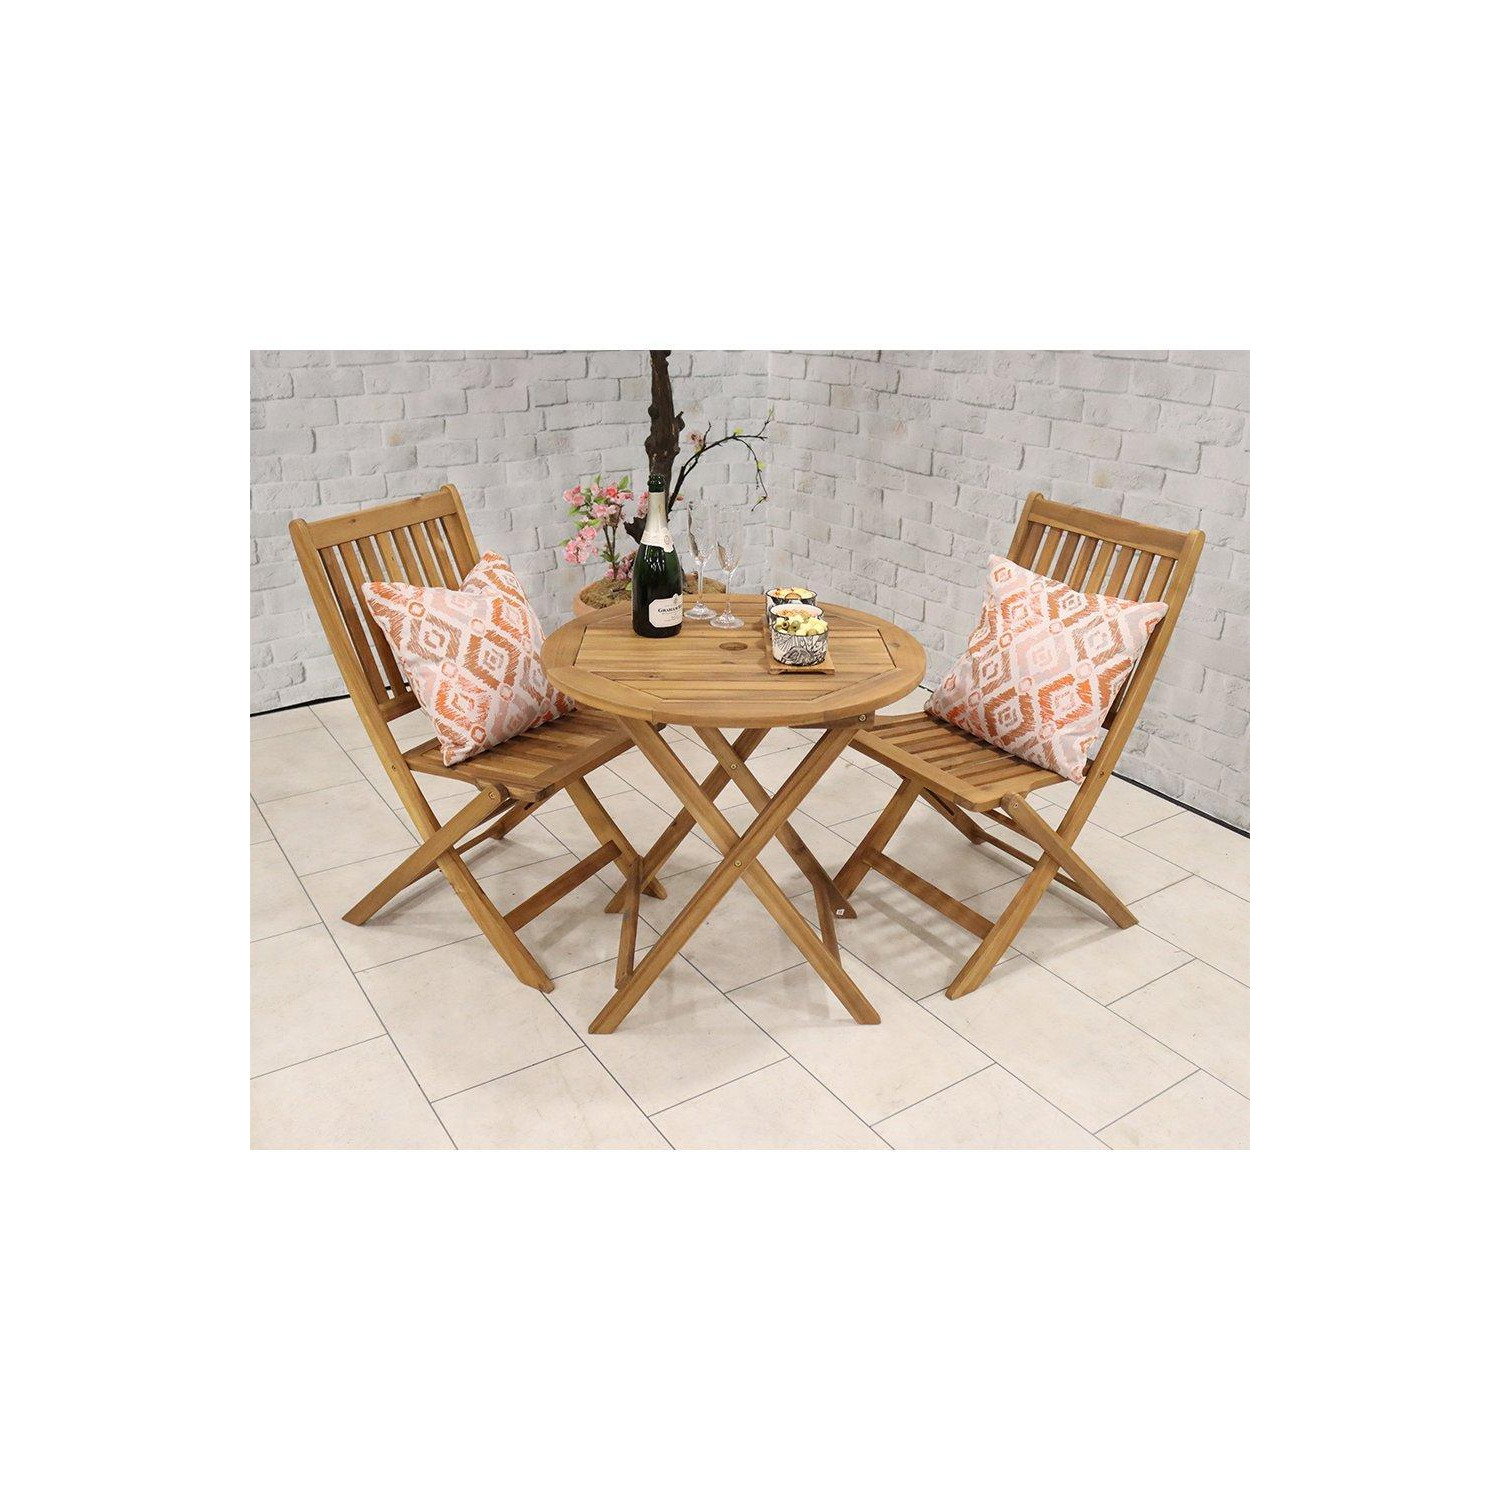 York 2 Seater Bistro Set: 70cm Round Folding York Table with 2 Manhattan Folding Chairs - image 1